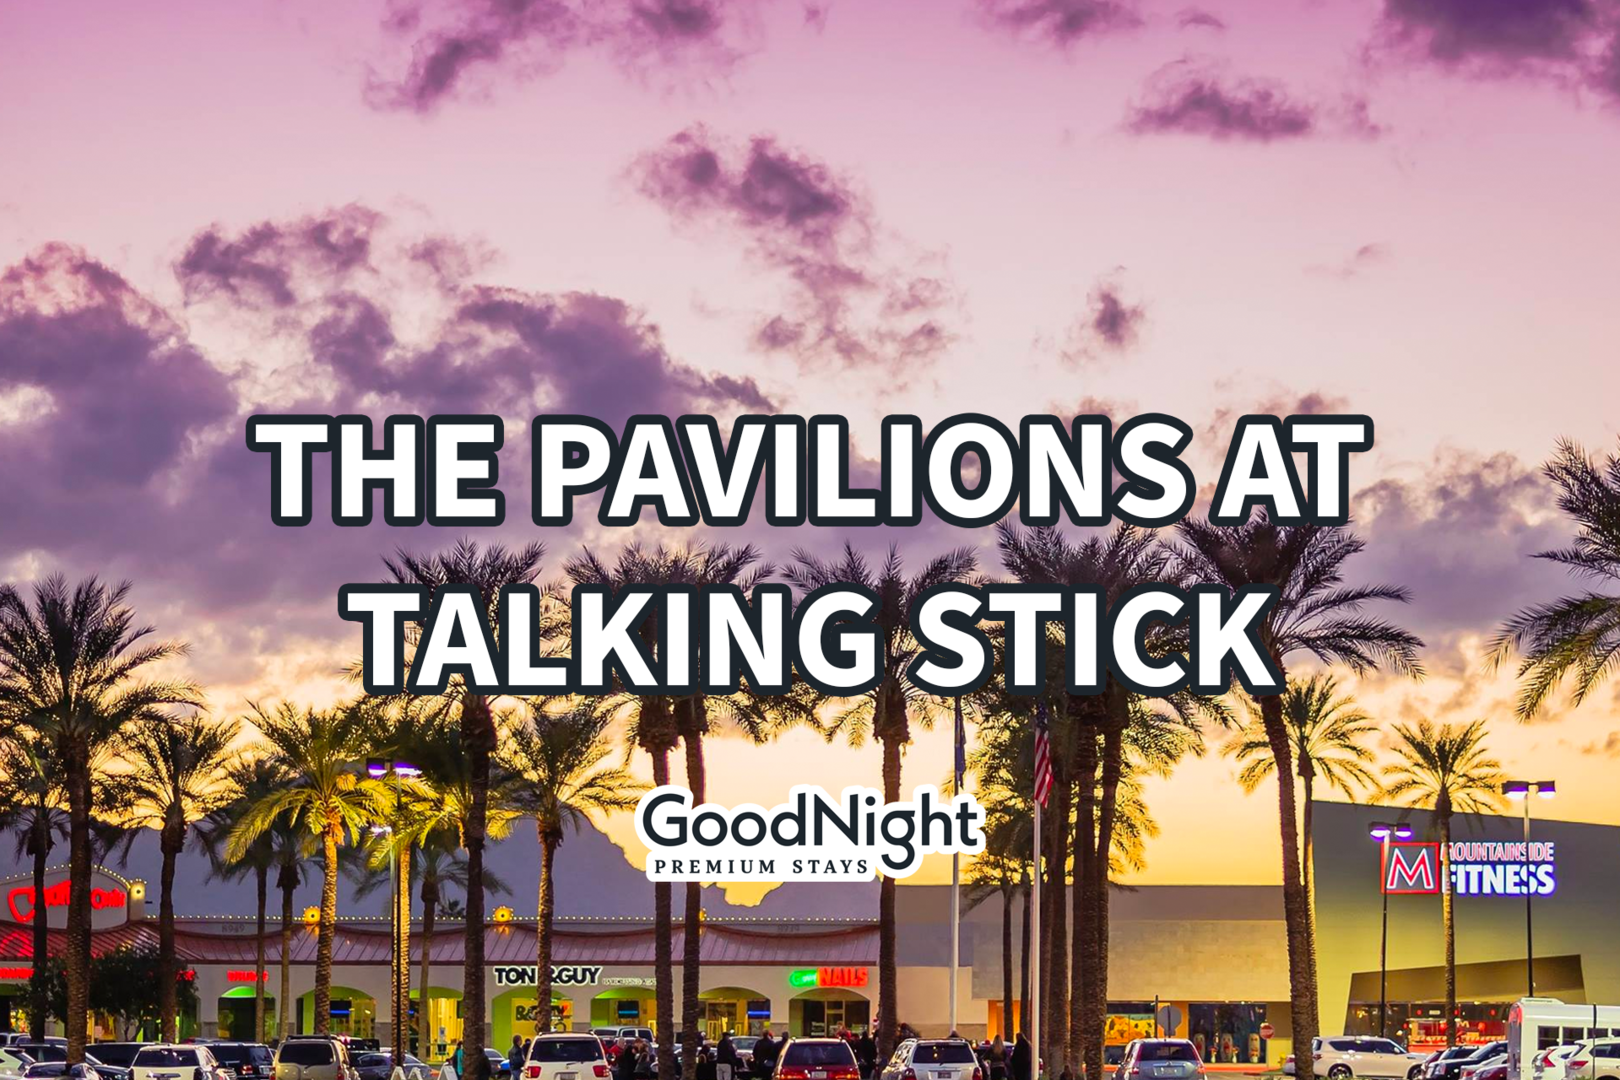 22 mins: The Pavilions at Talking Stick